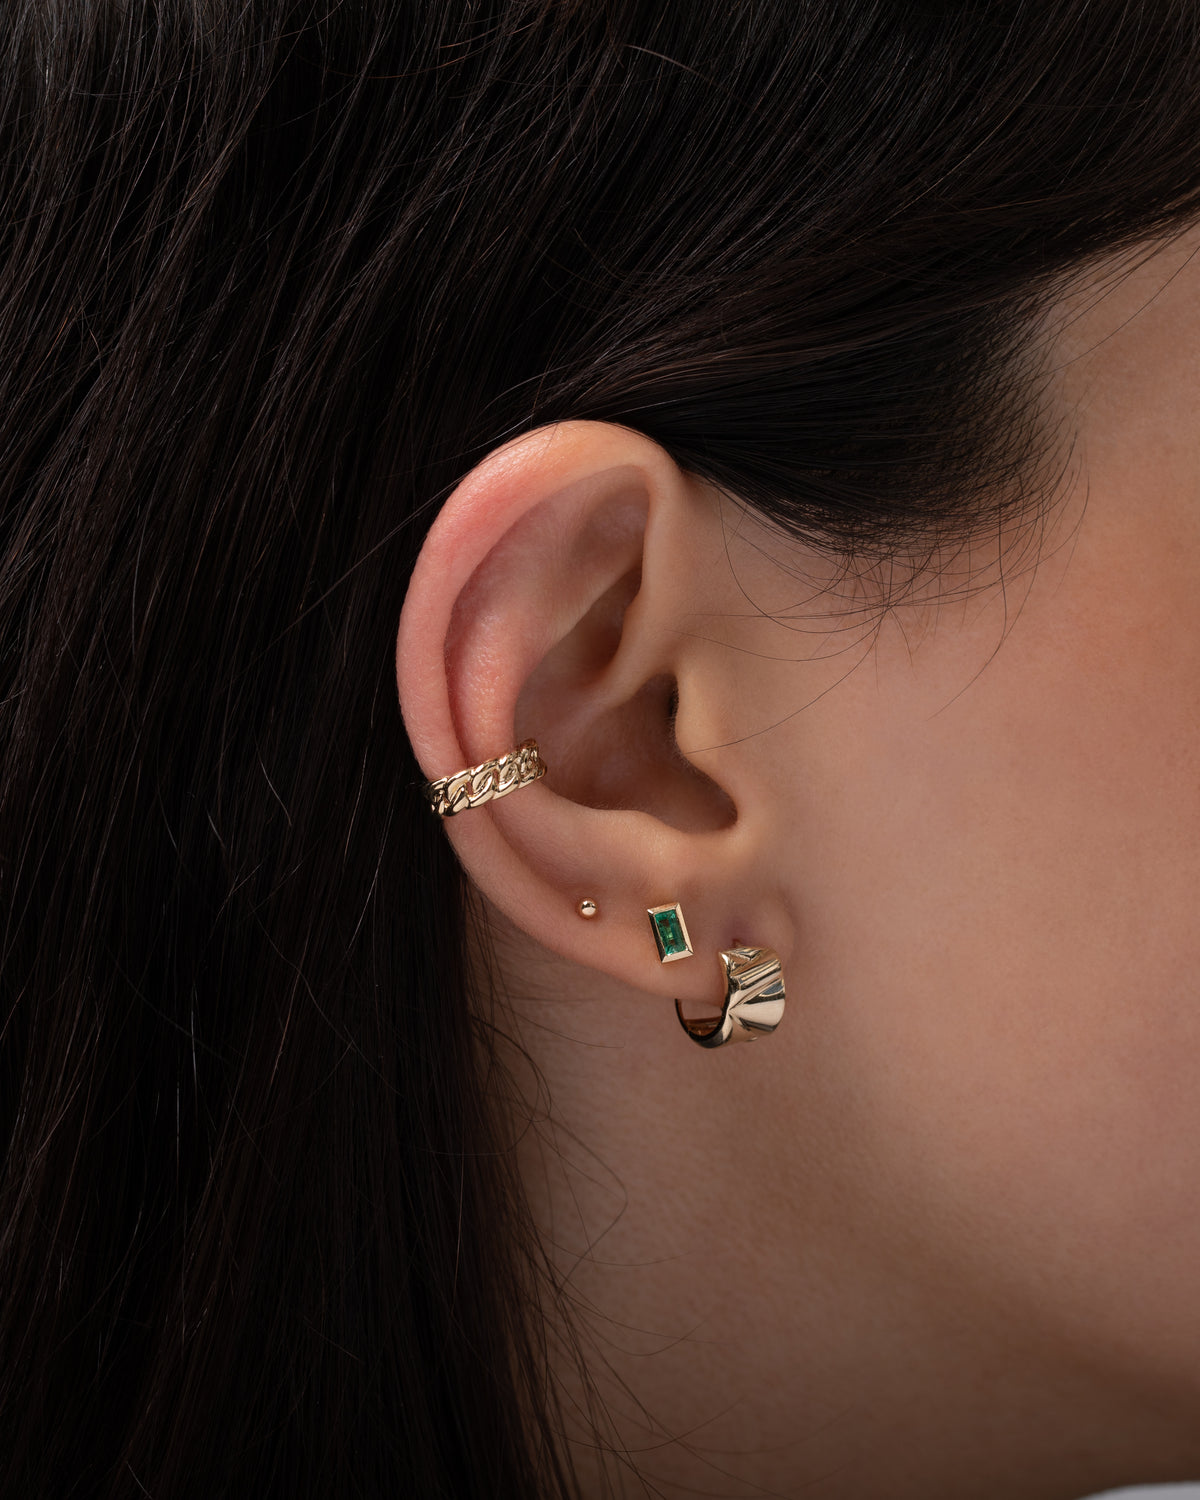 Emerald Baguette Stud Earrings